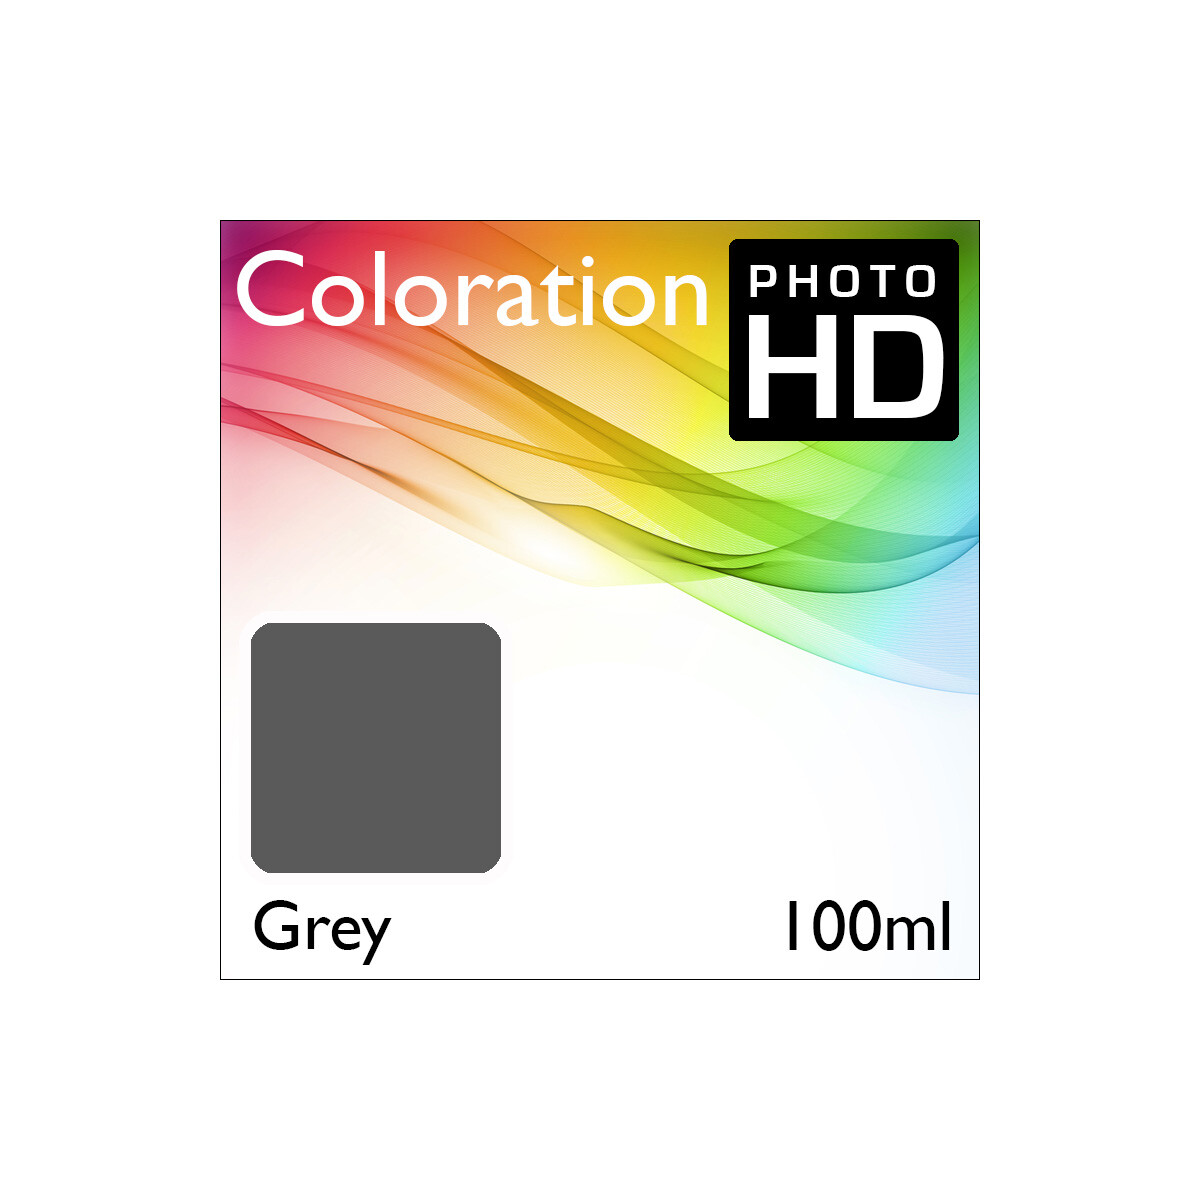 Coloration PhotoHD Bottle Grey 100ml